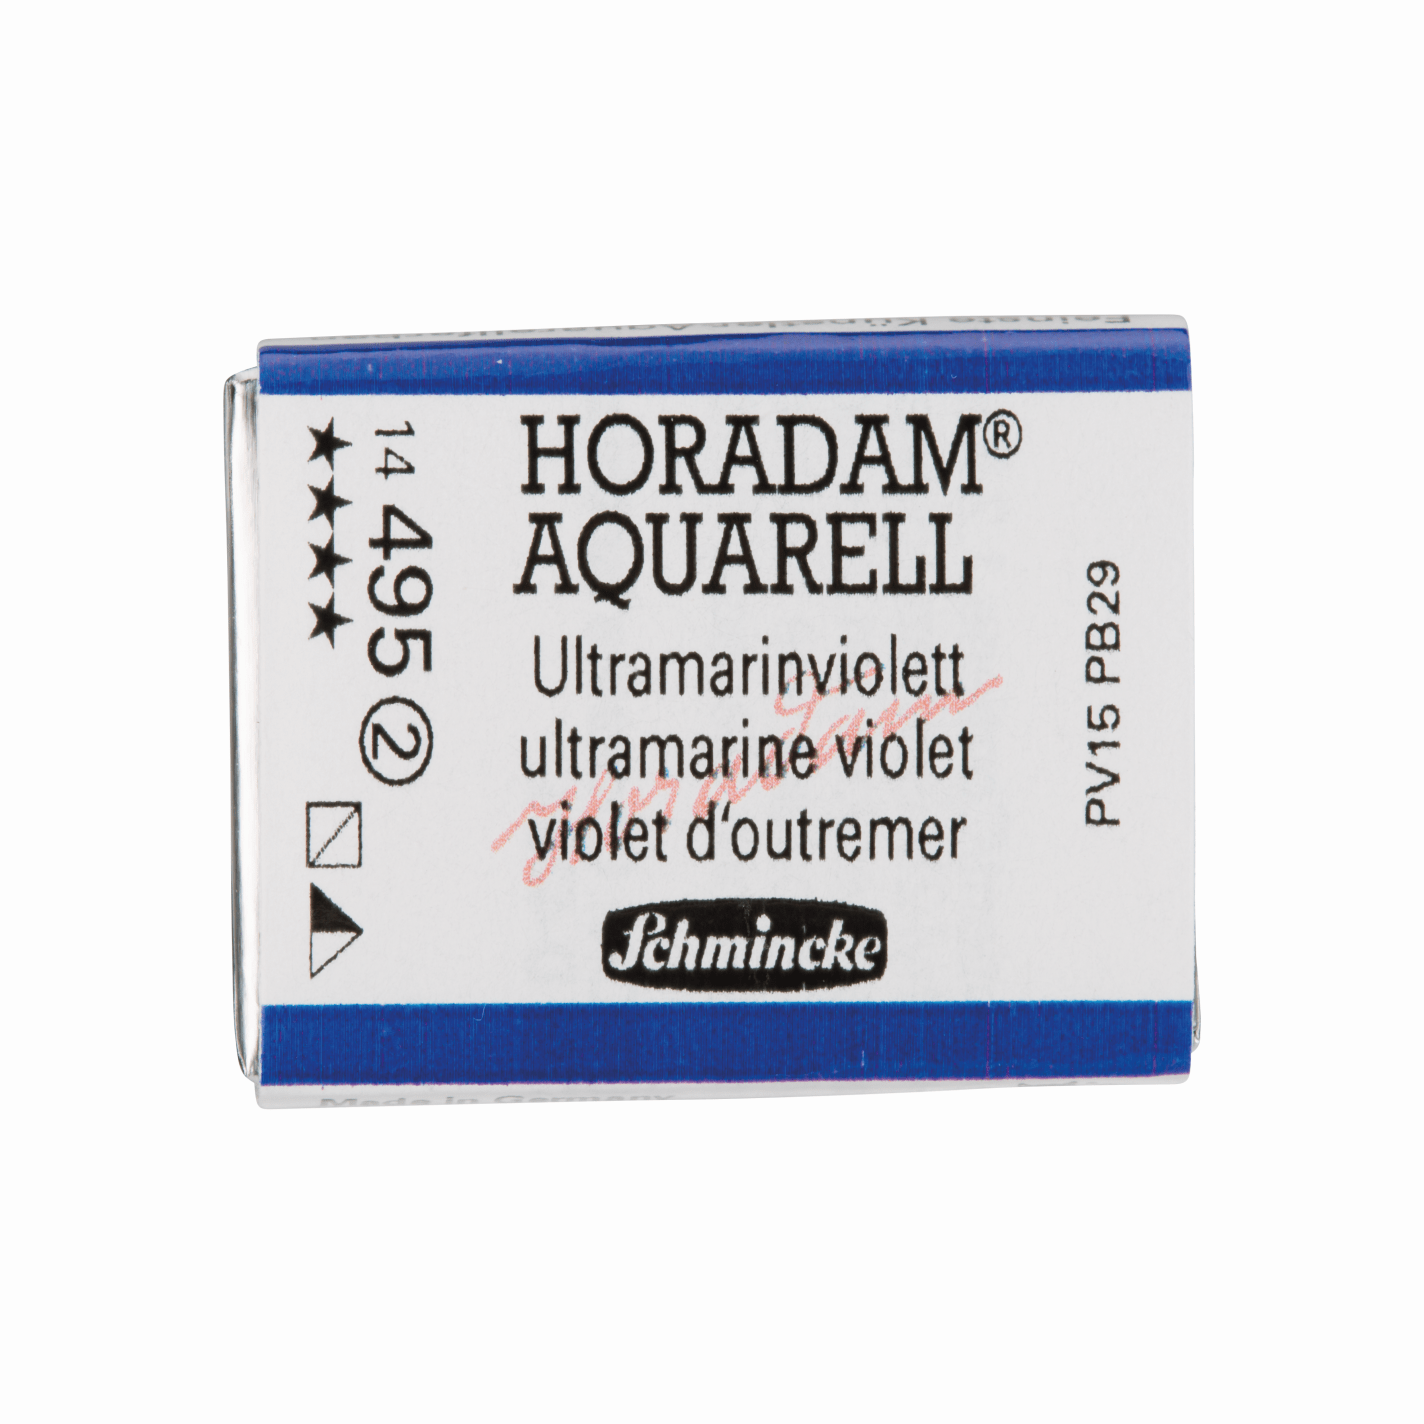 Schmincke Horadam Aquarell pans 1/1 pan Ultramarine Violet